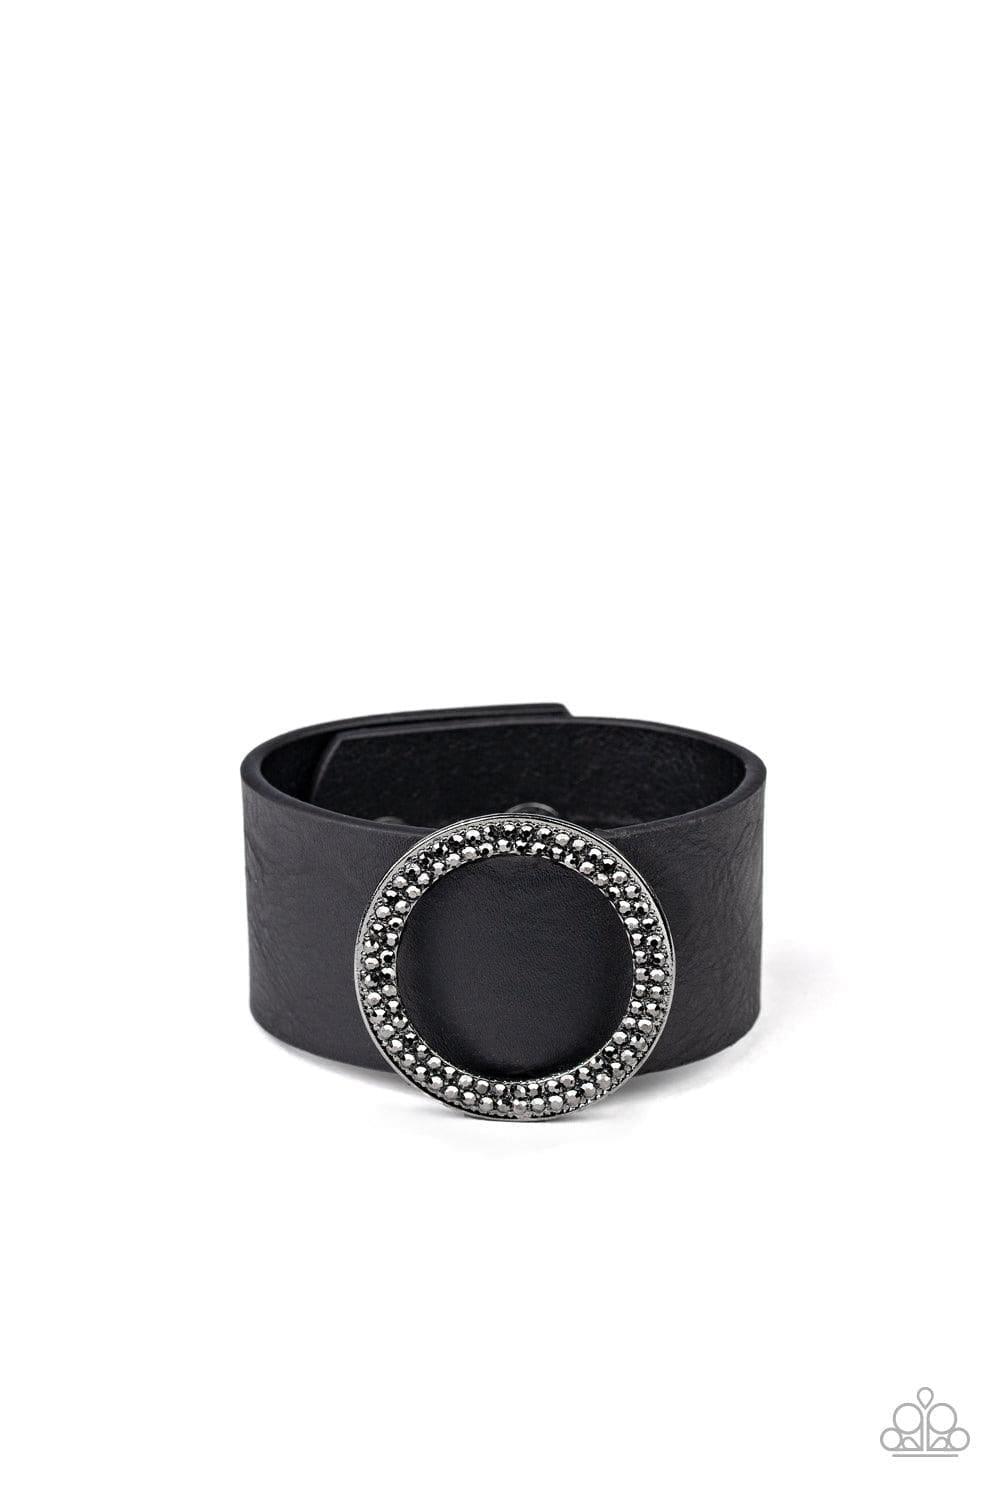 Paparazzi Accessories - Ring Them In - Black Snap Bracelet - Bling by JessieK